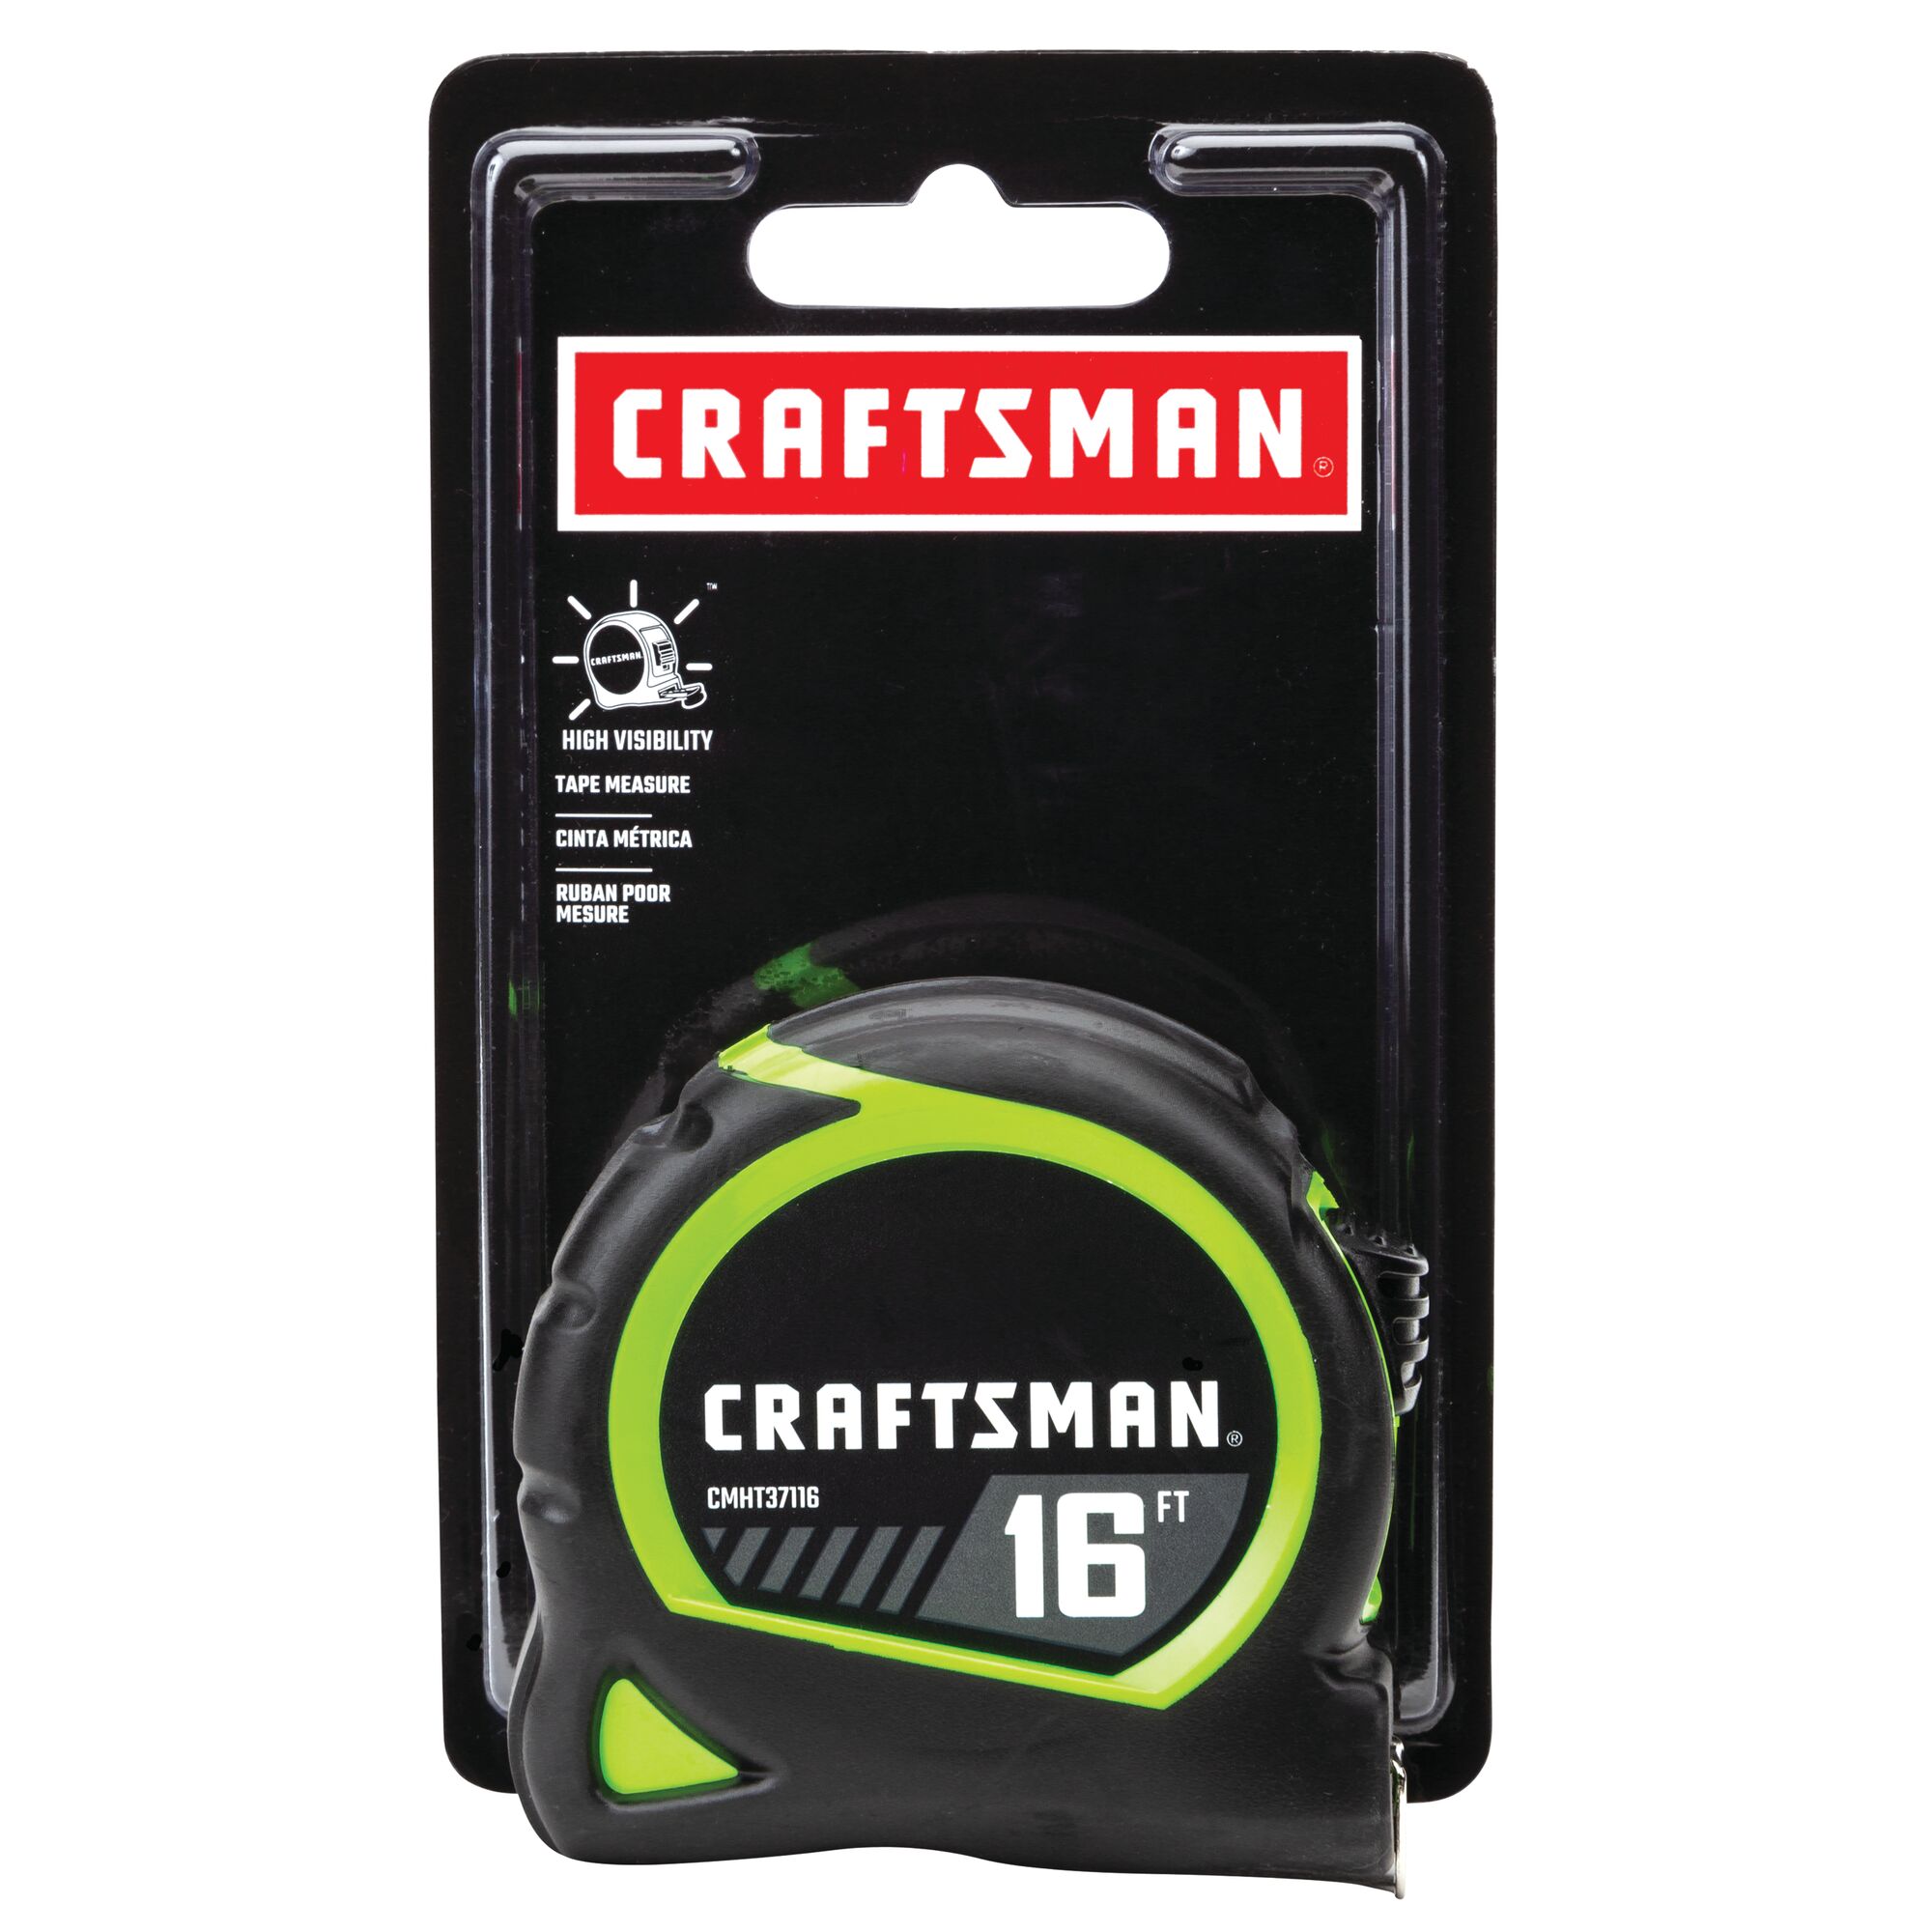 View of CRAFTSMAN Measuring: Short Tapes packaging